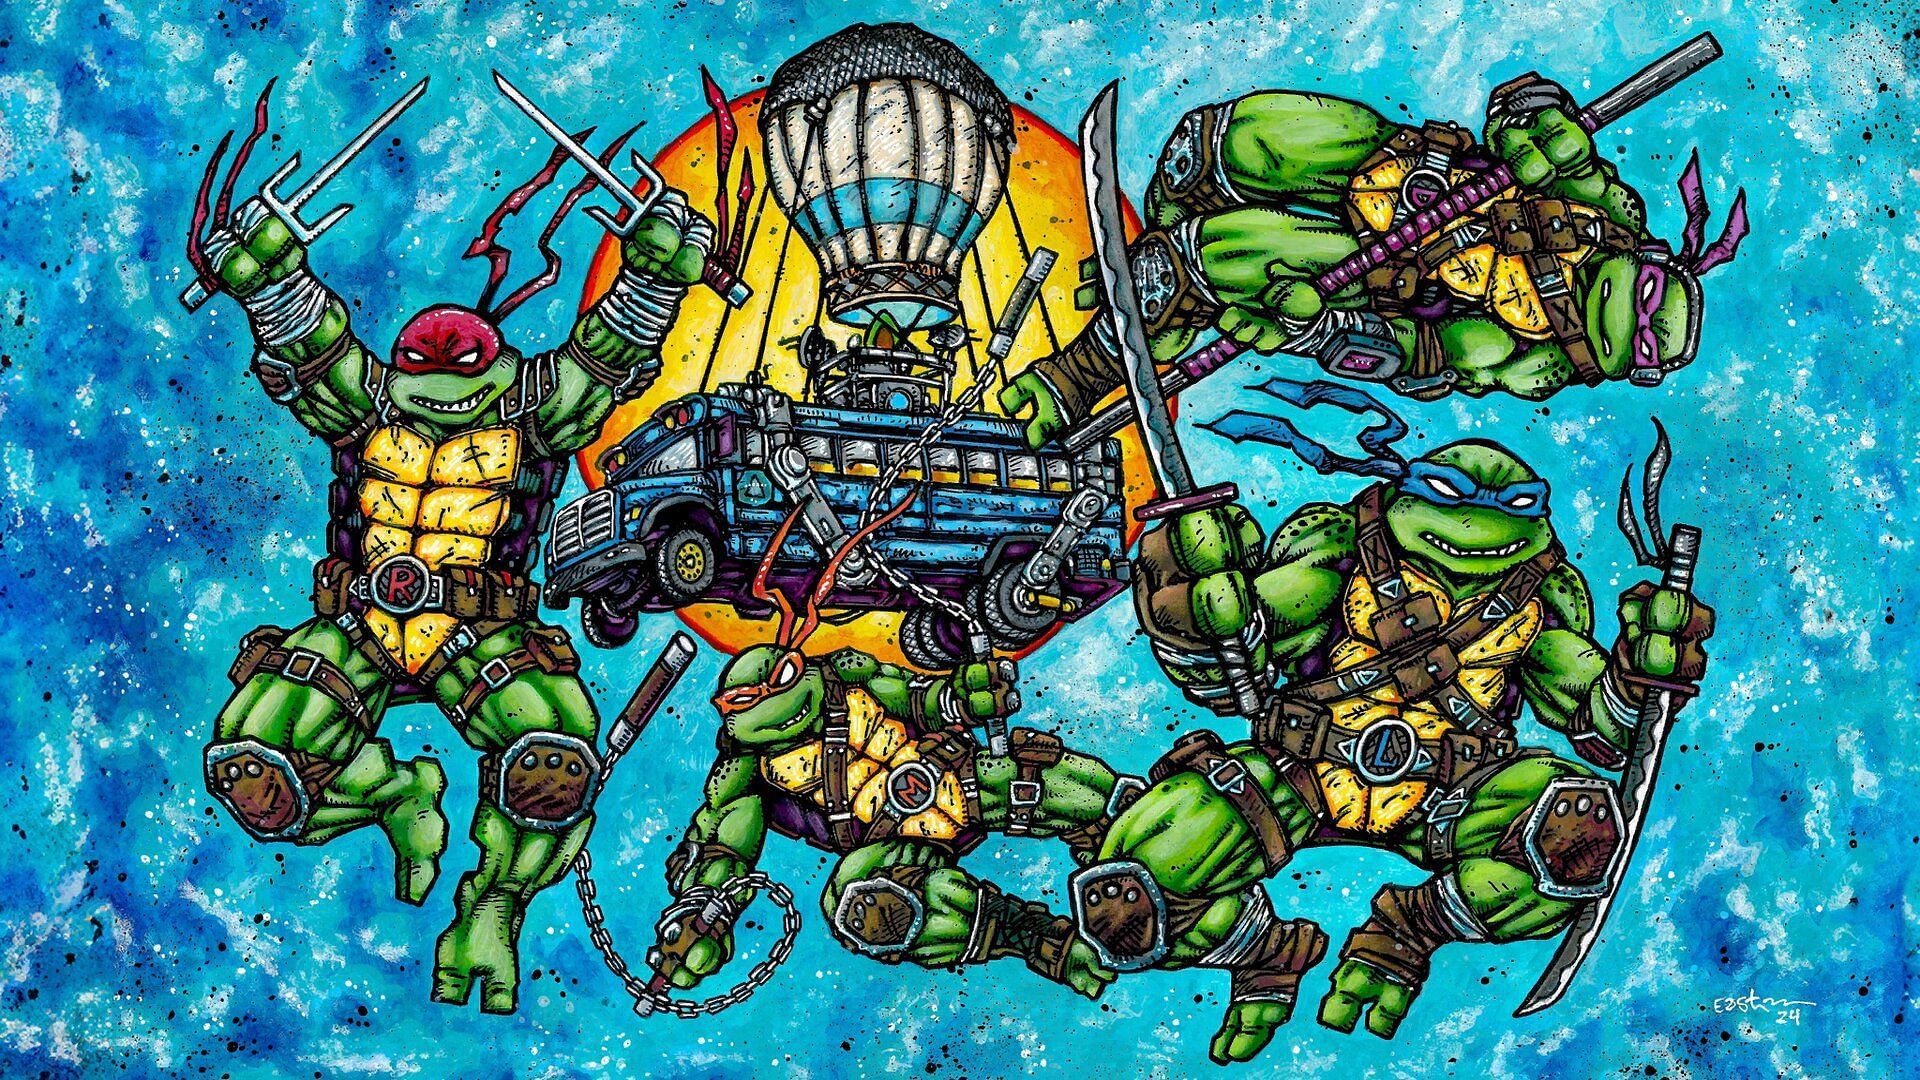 All Fortnite Teenager Mutant Ninja Turtles Quests leaked: Full list of Challenges and rewards